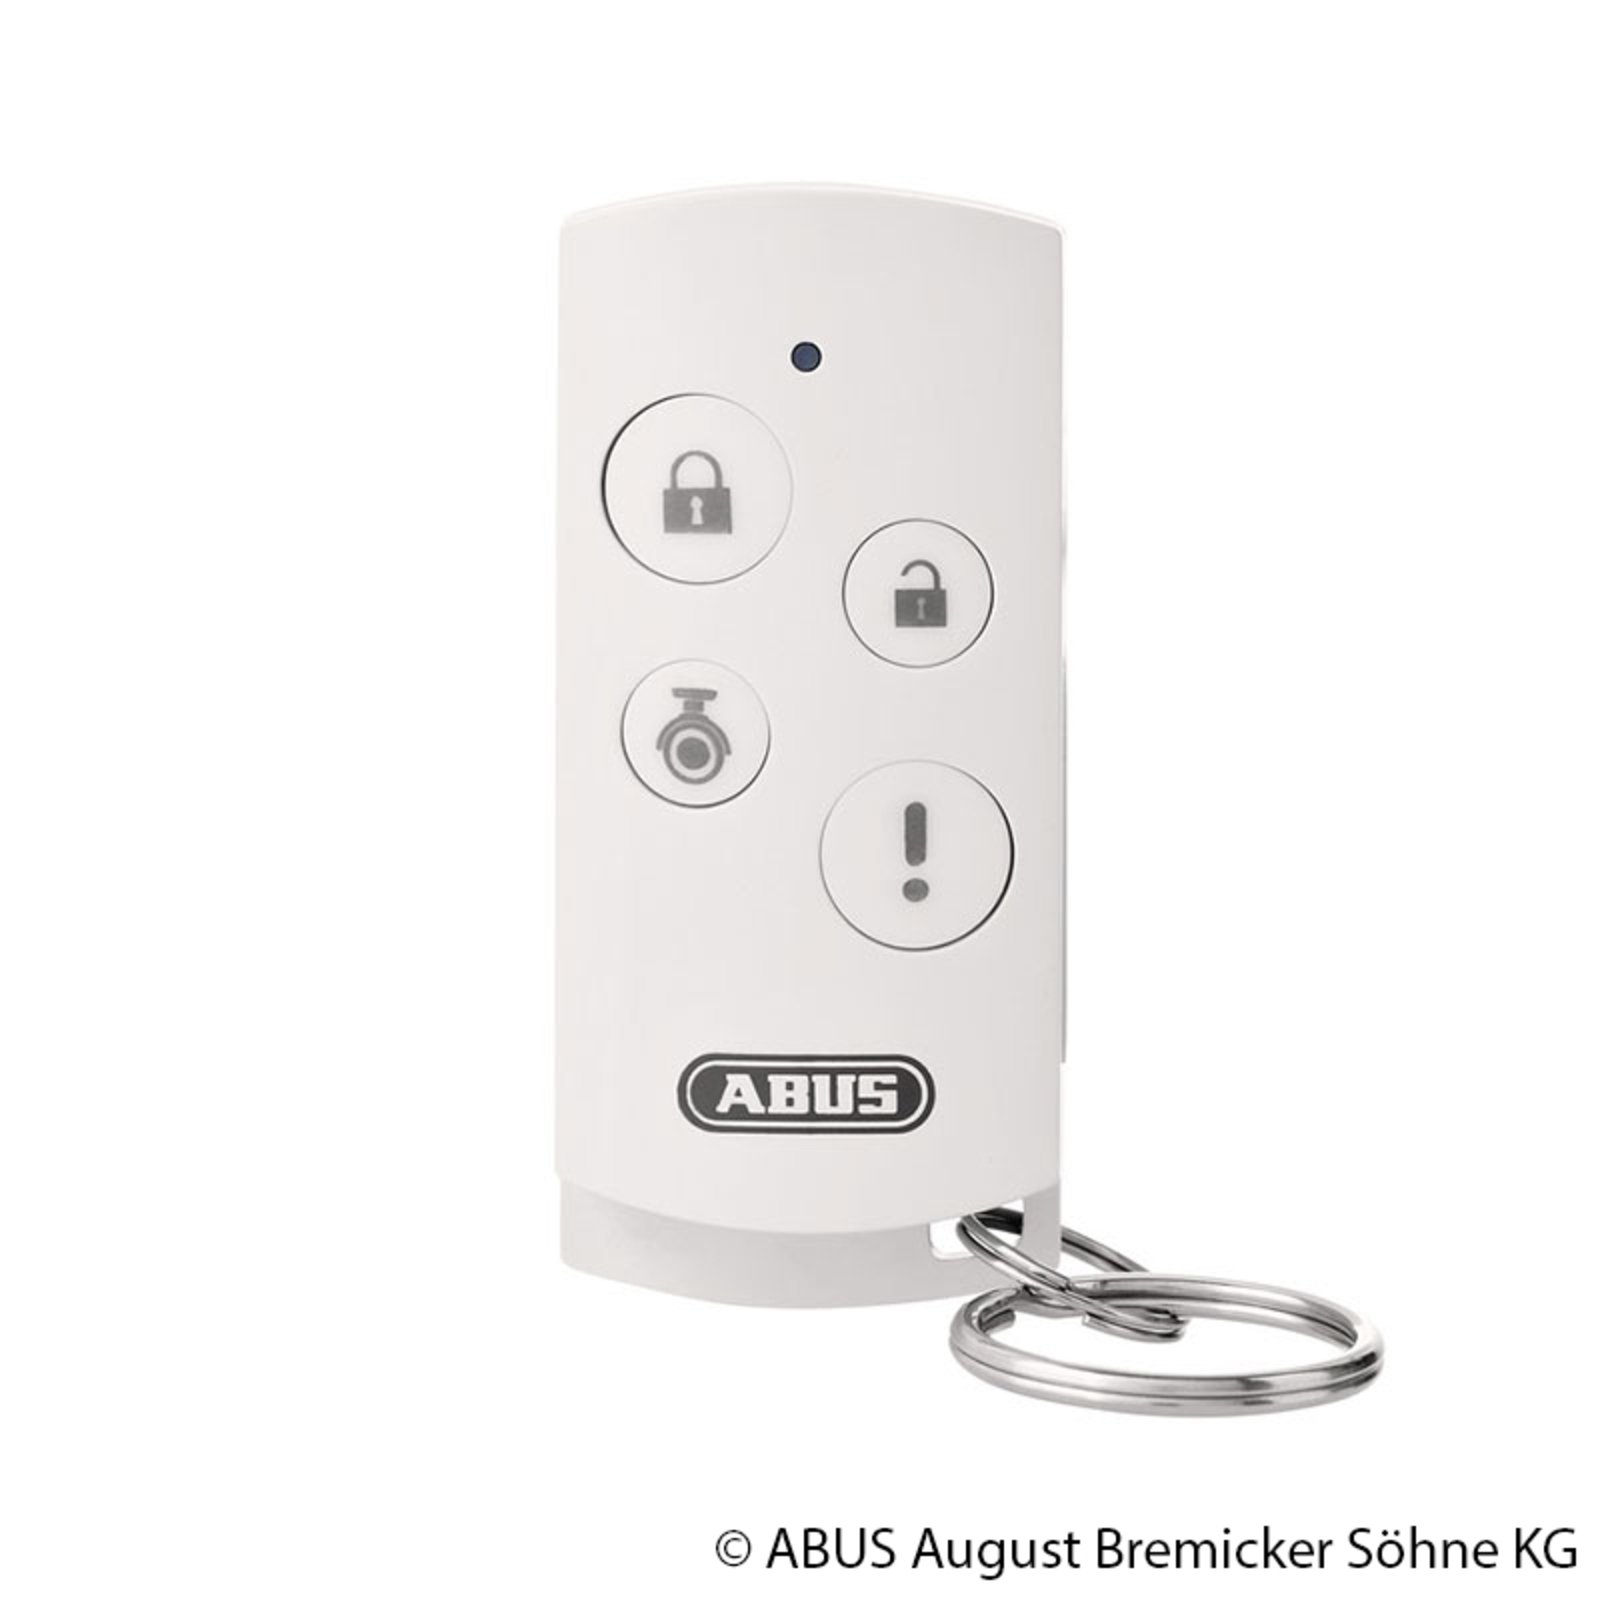 ABUS Smartvest wireless remote control